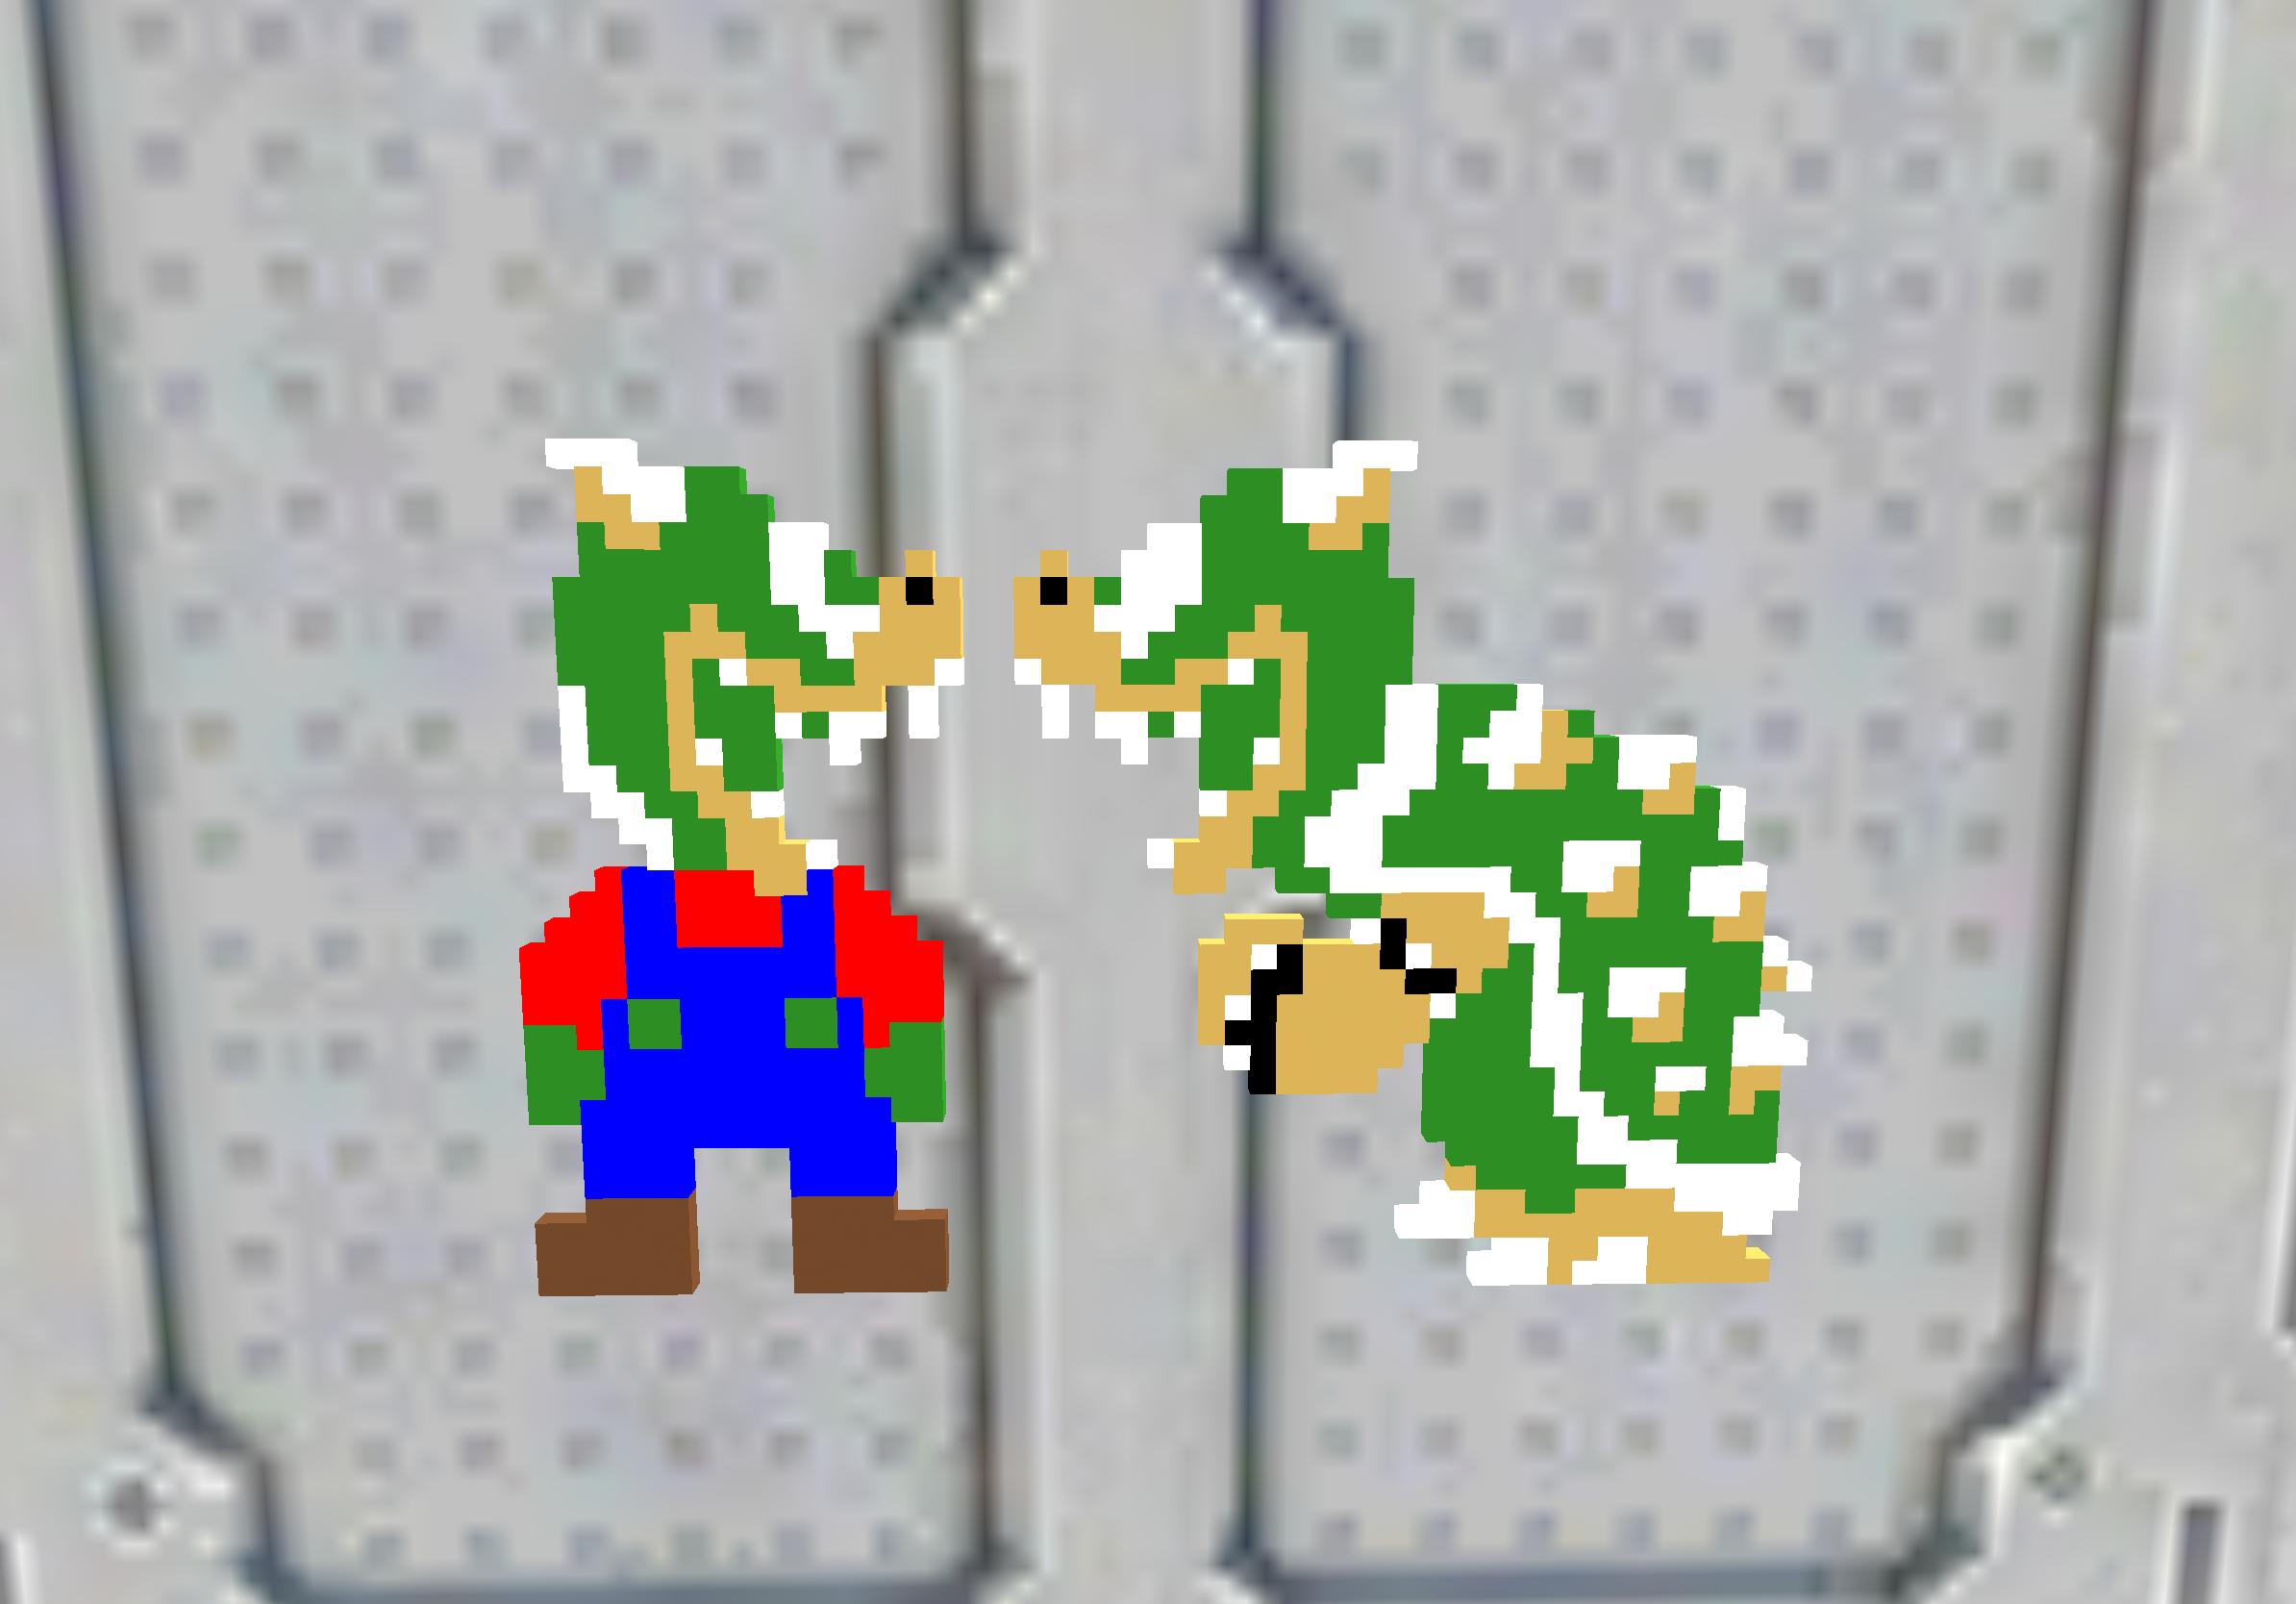 Mario transformed into bowser